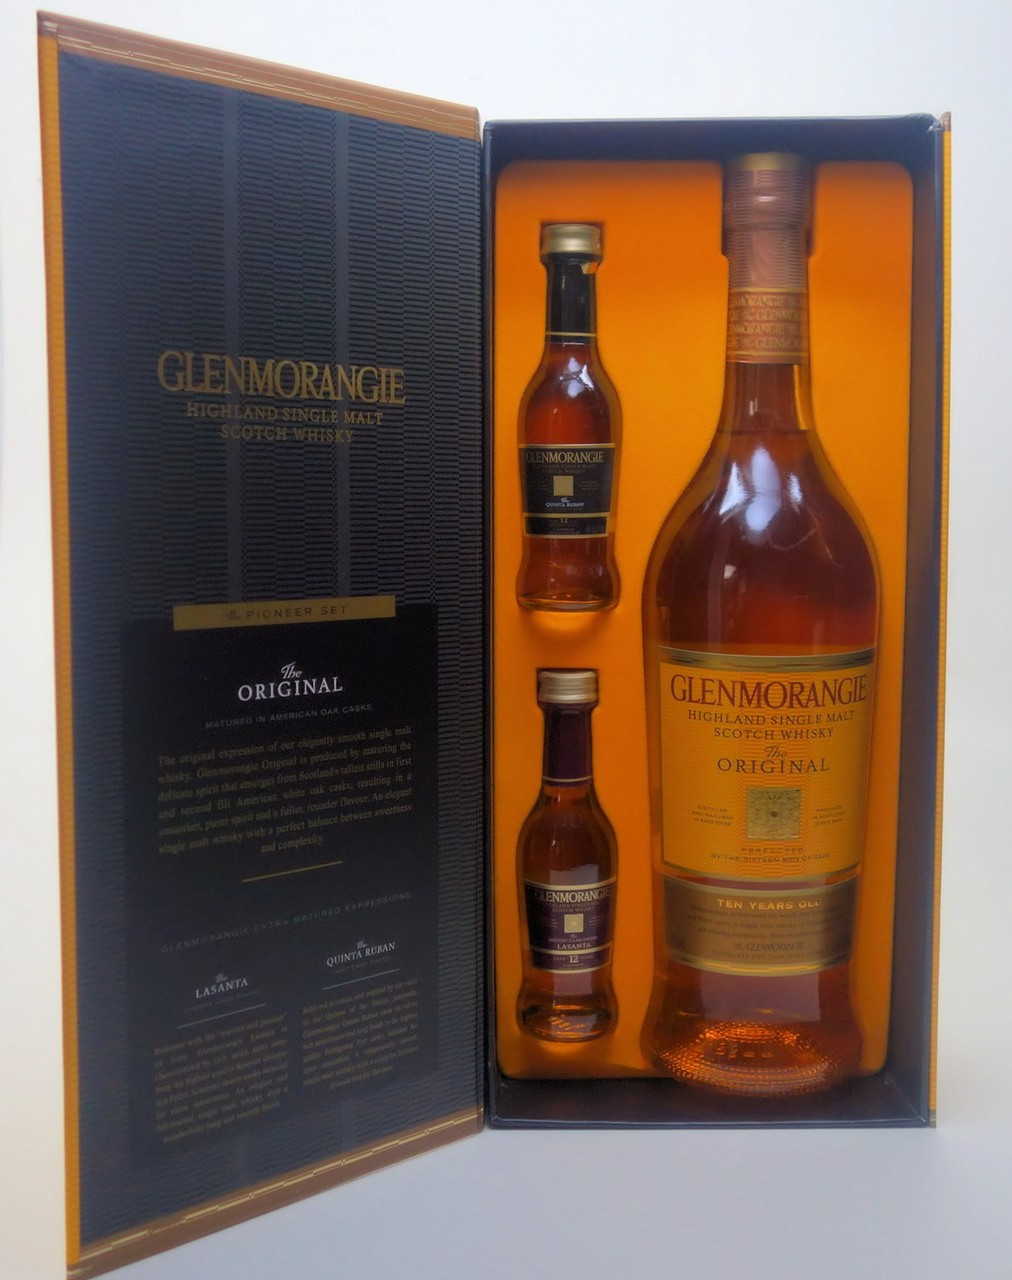 Glenmorangie The Original 10 Year Old Single Malt Scotch Whisky